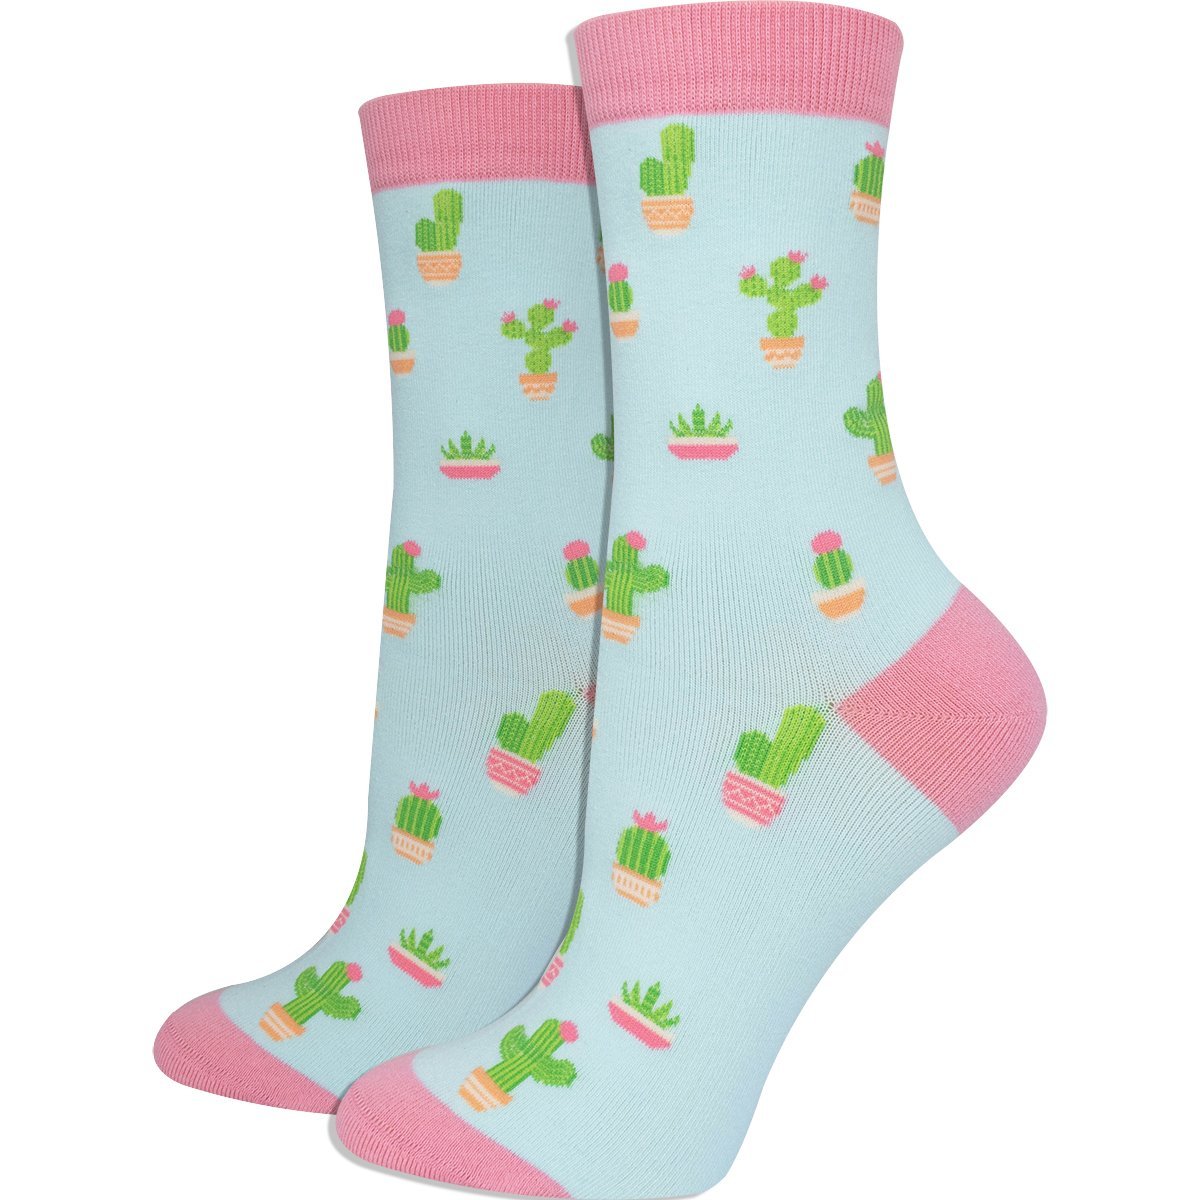 Cactus Socks - Imagery Socks